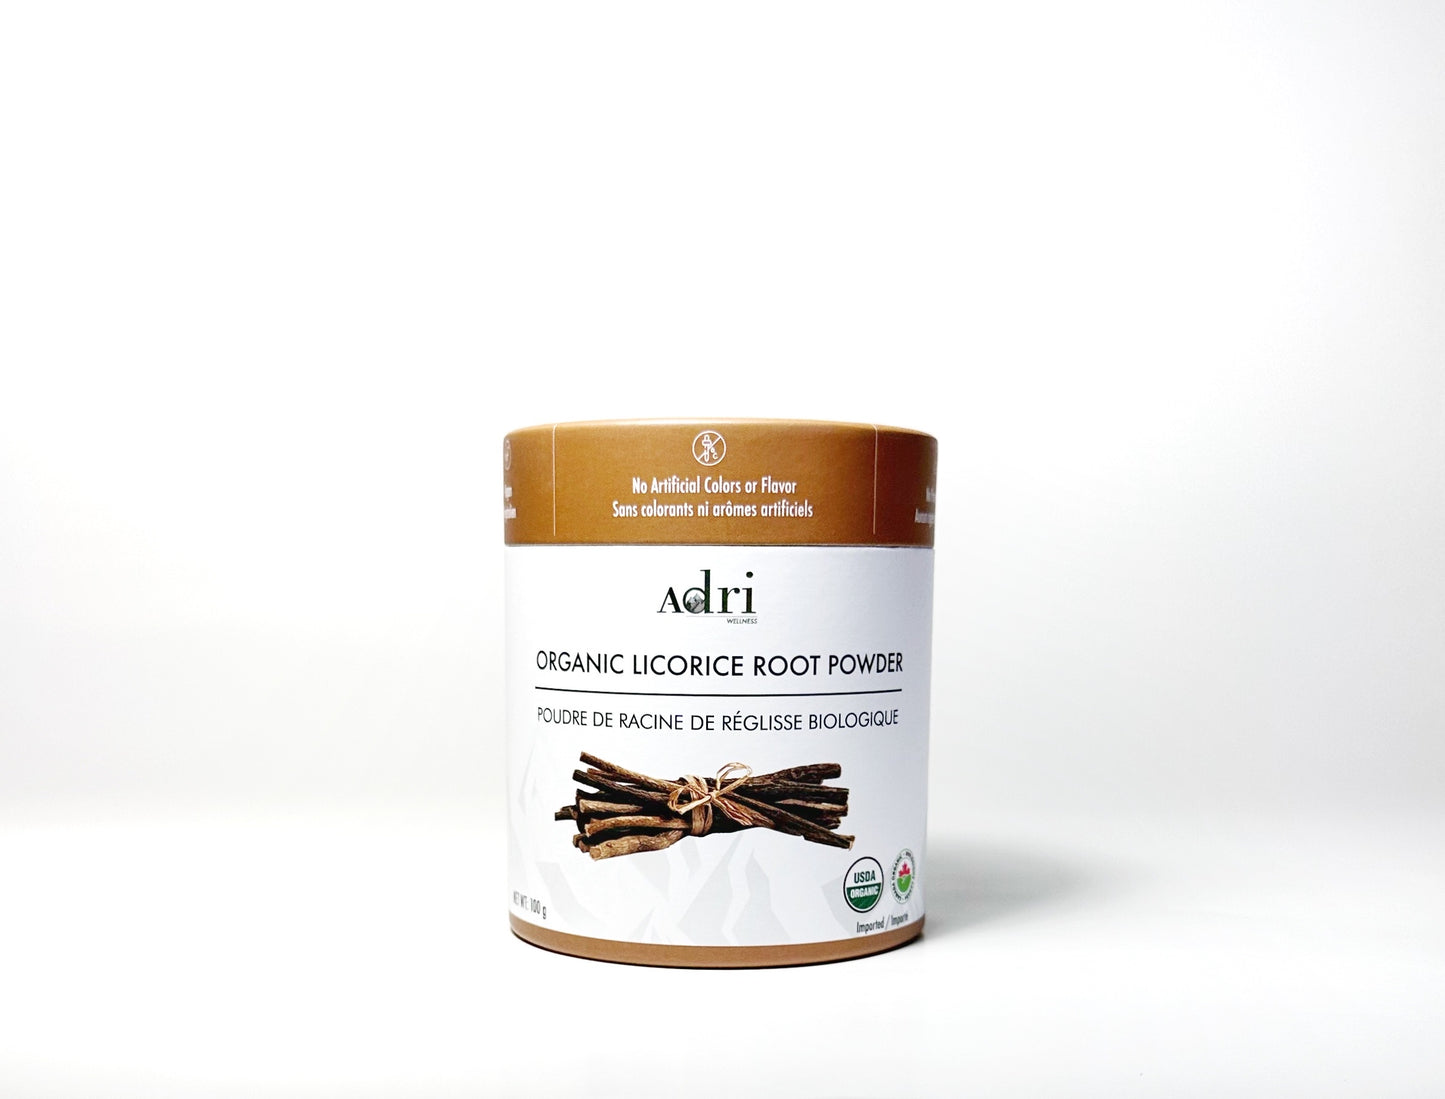 a 100 gm packaging of Adri Wellness' Organic Licorice Root Powder